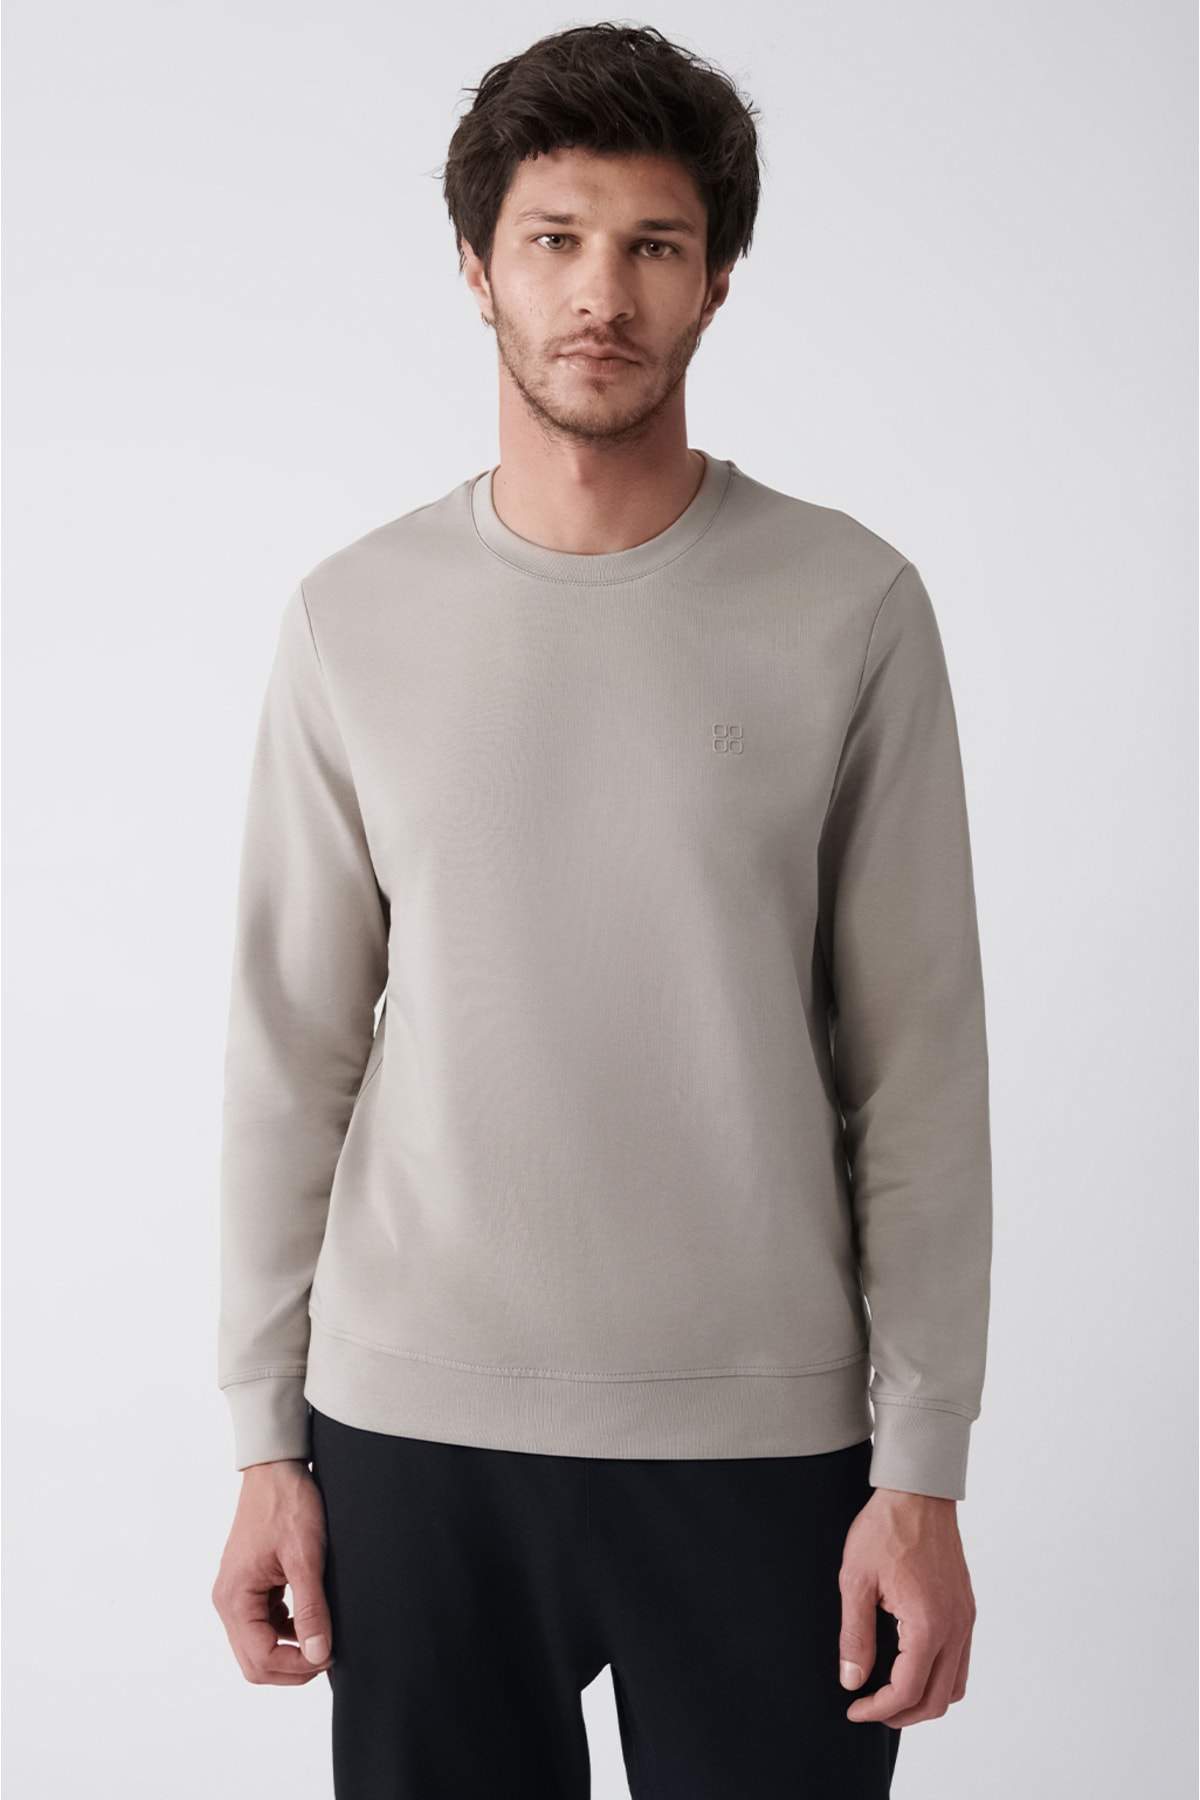 stone-crew-neck-cotton-flexible-comfort-fit-sweatshirt